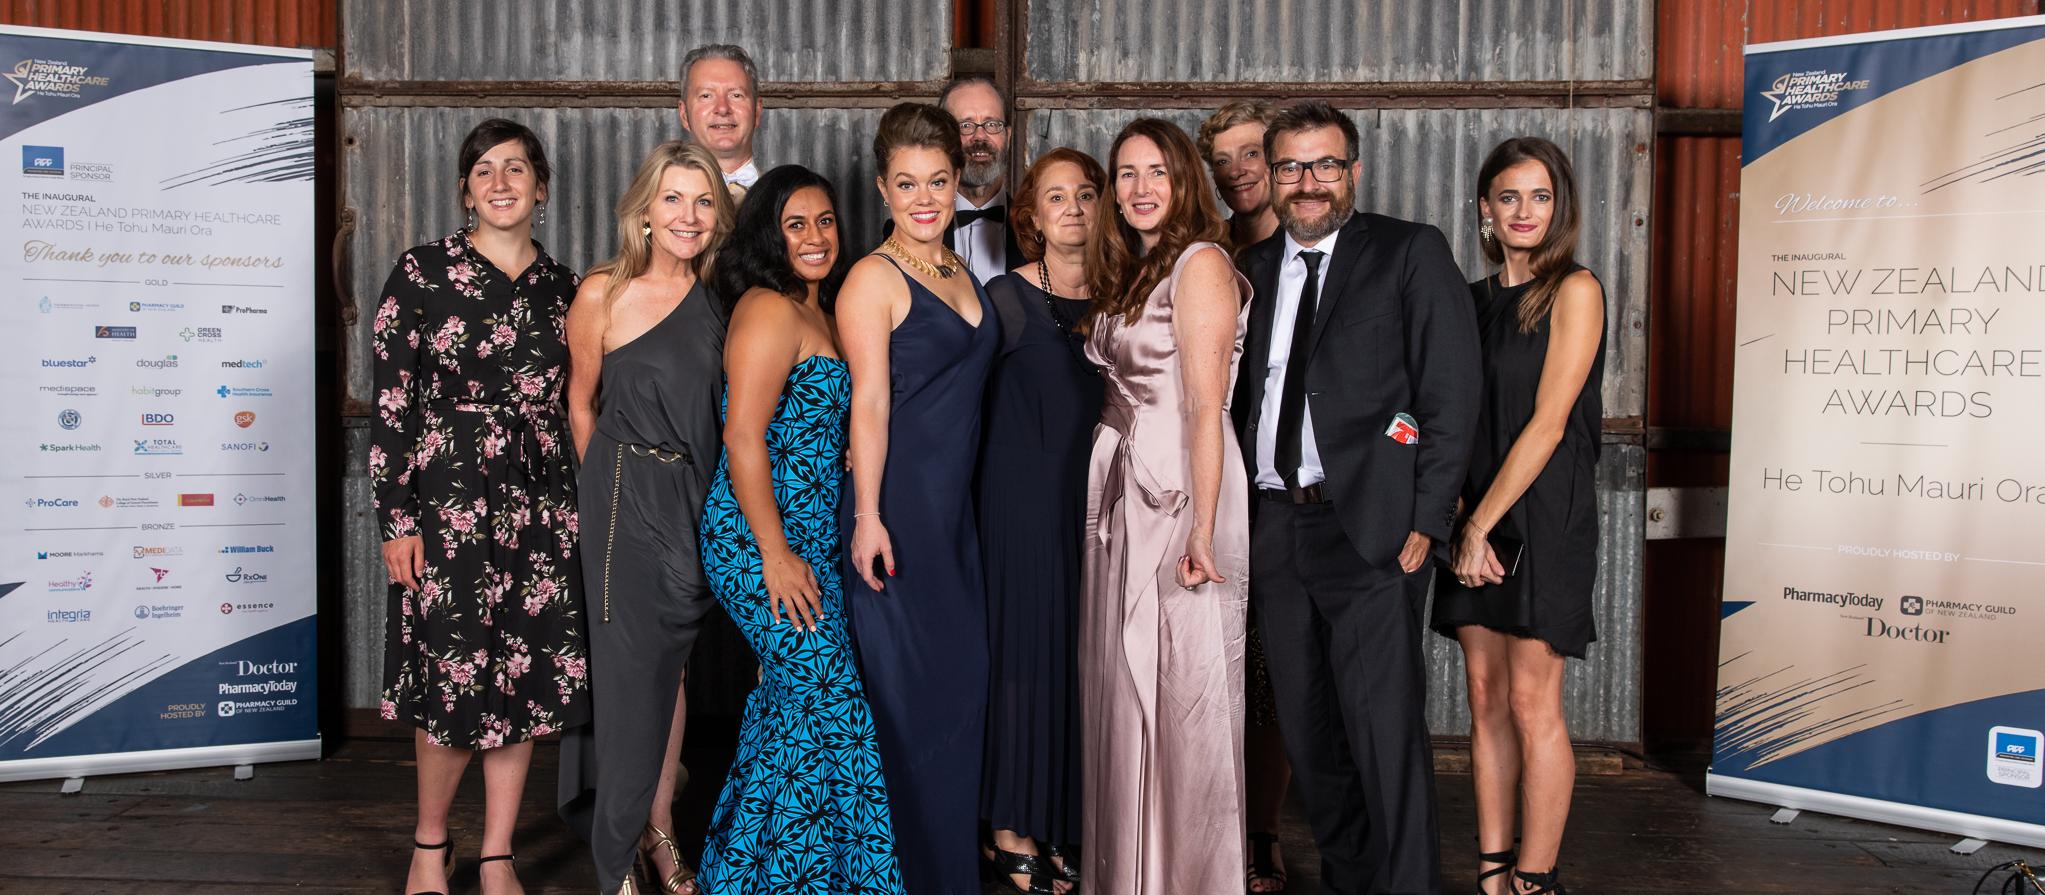 The Health Media team photo at the NZPHA awards